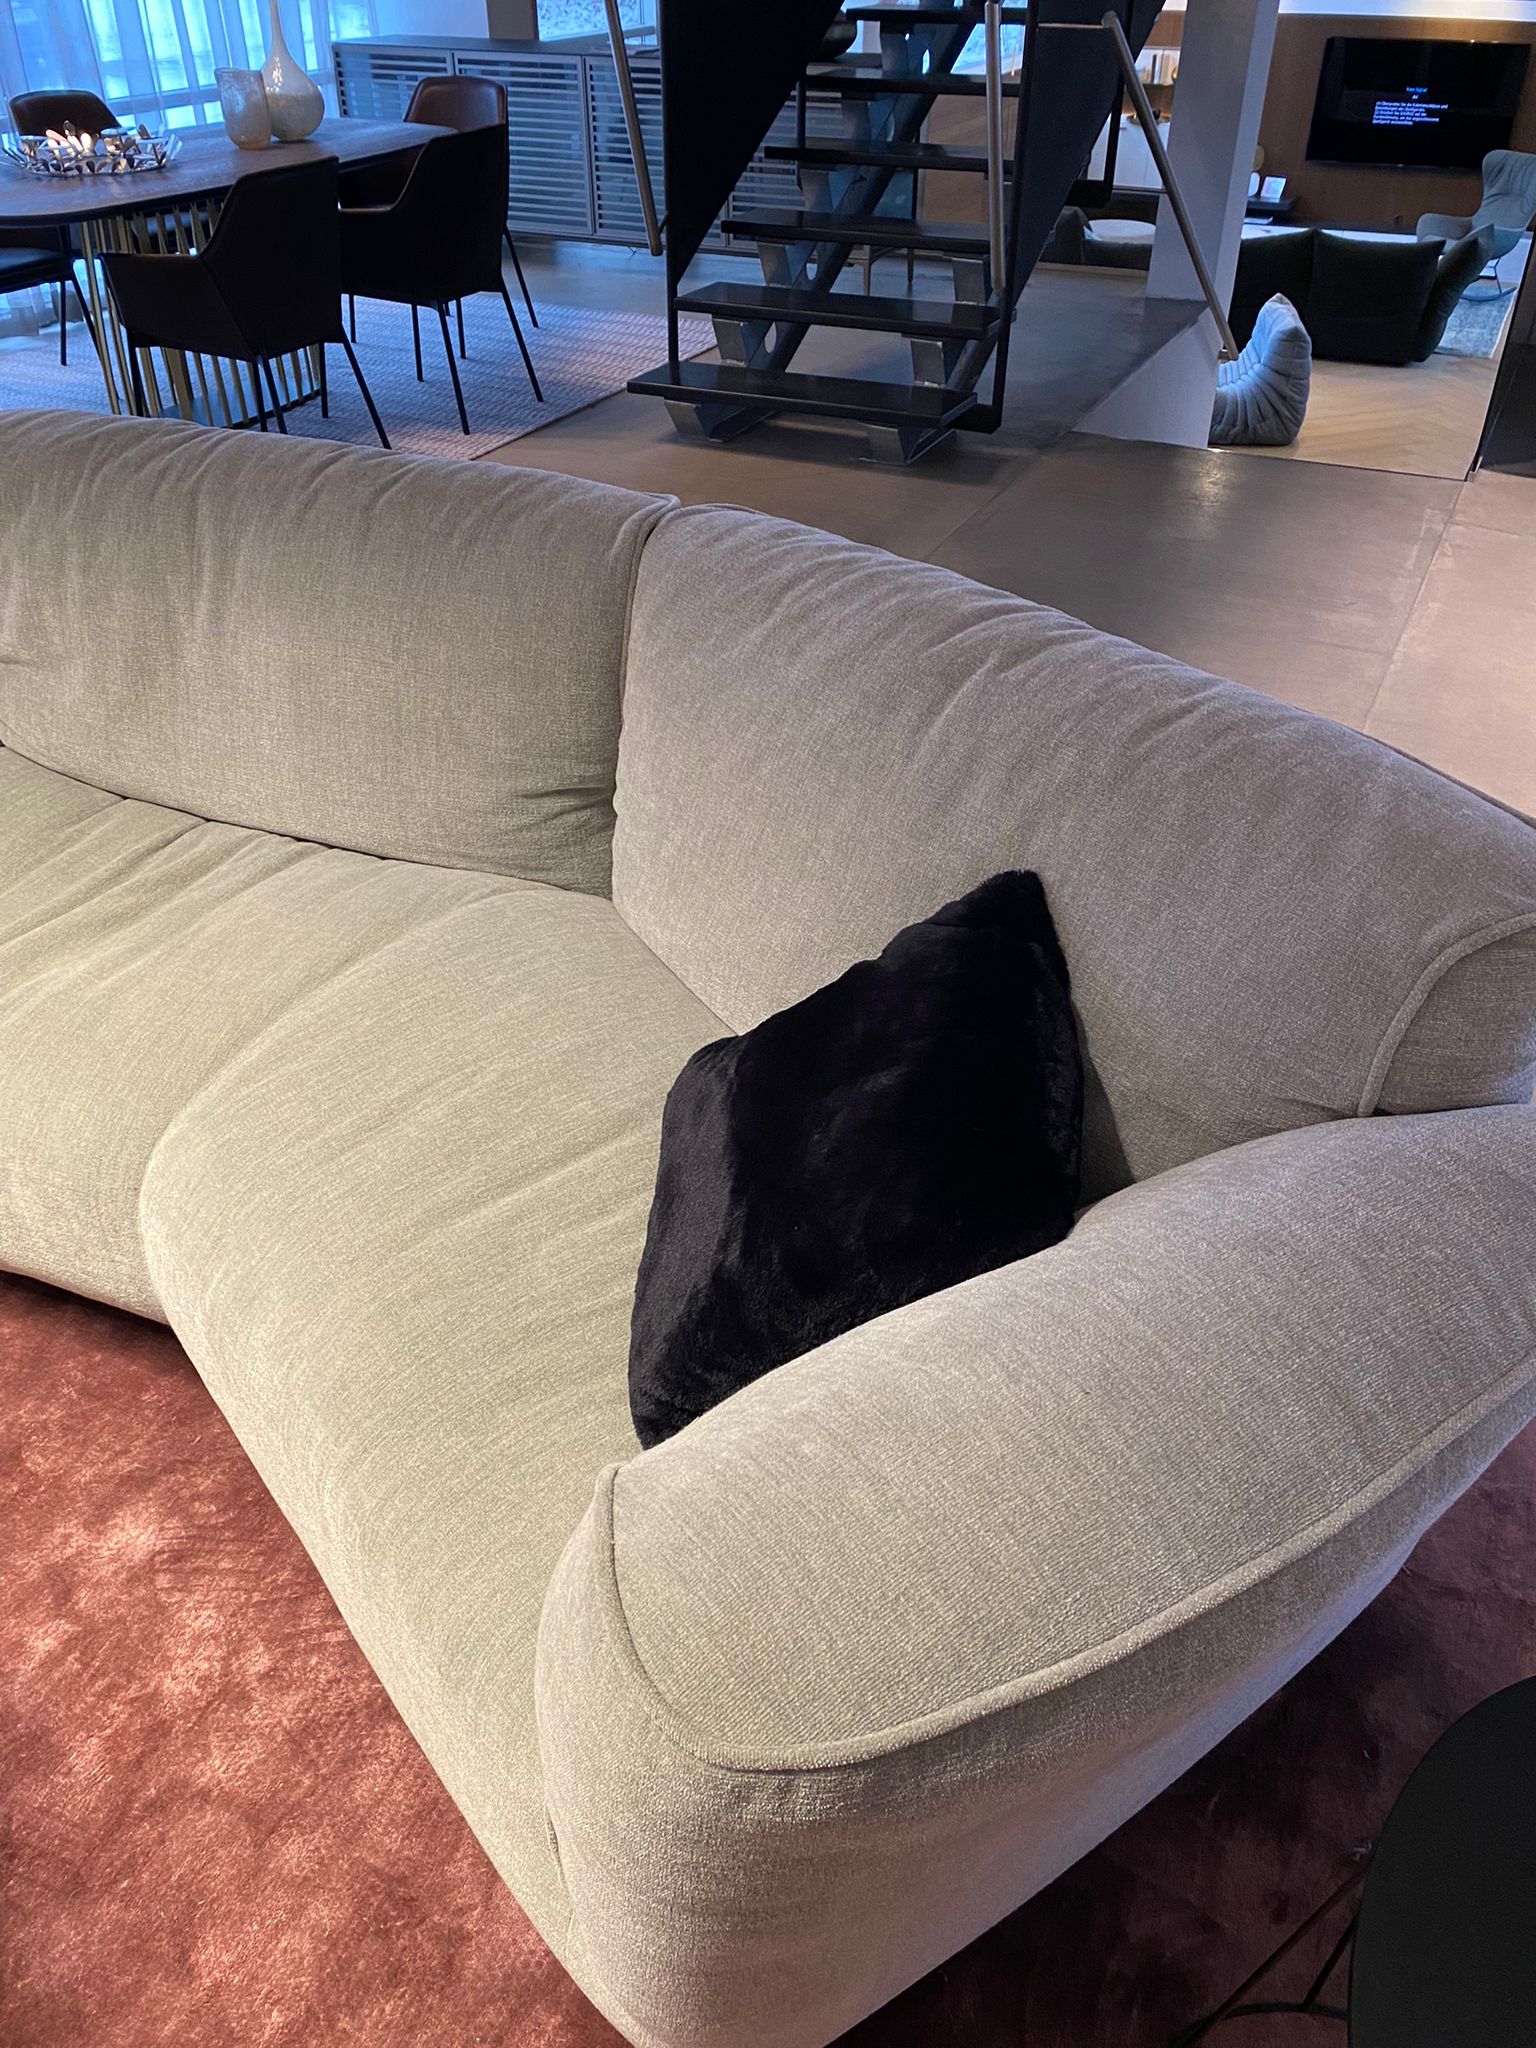 Sofa Grande Soffice